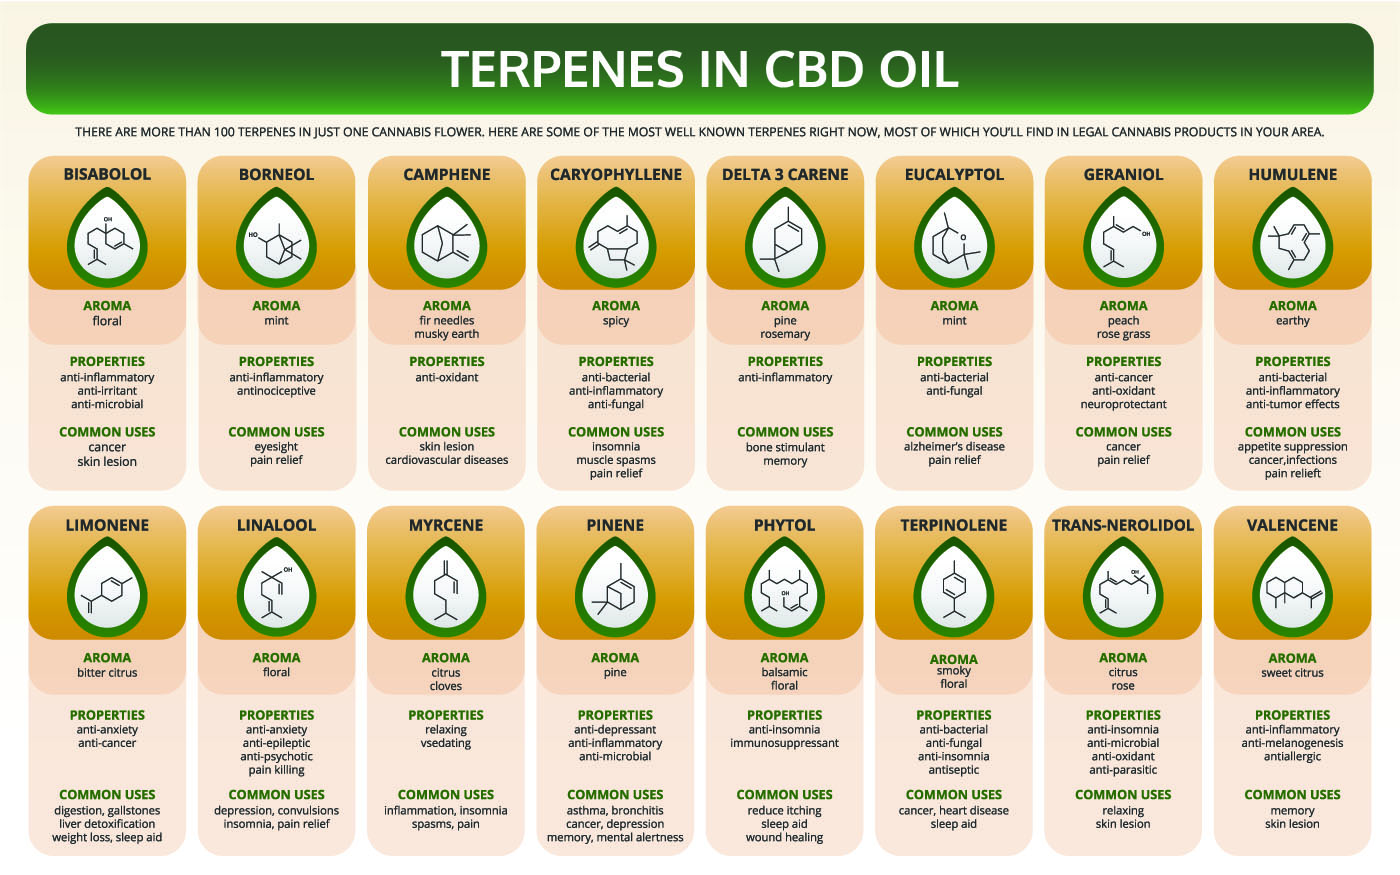 Terpenes in CBD Oil infographic